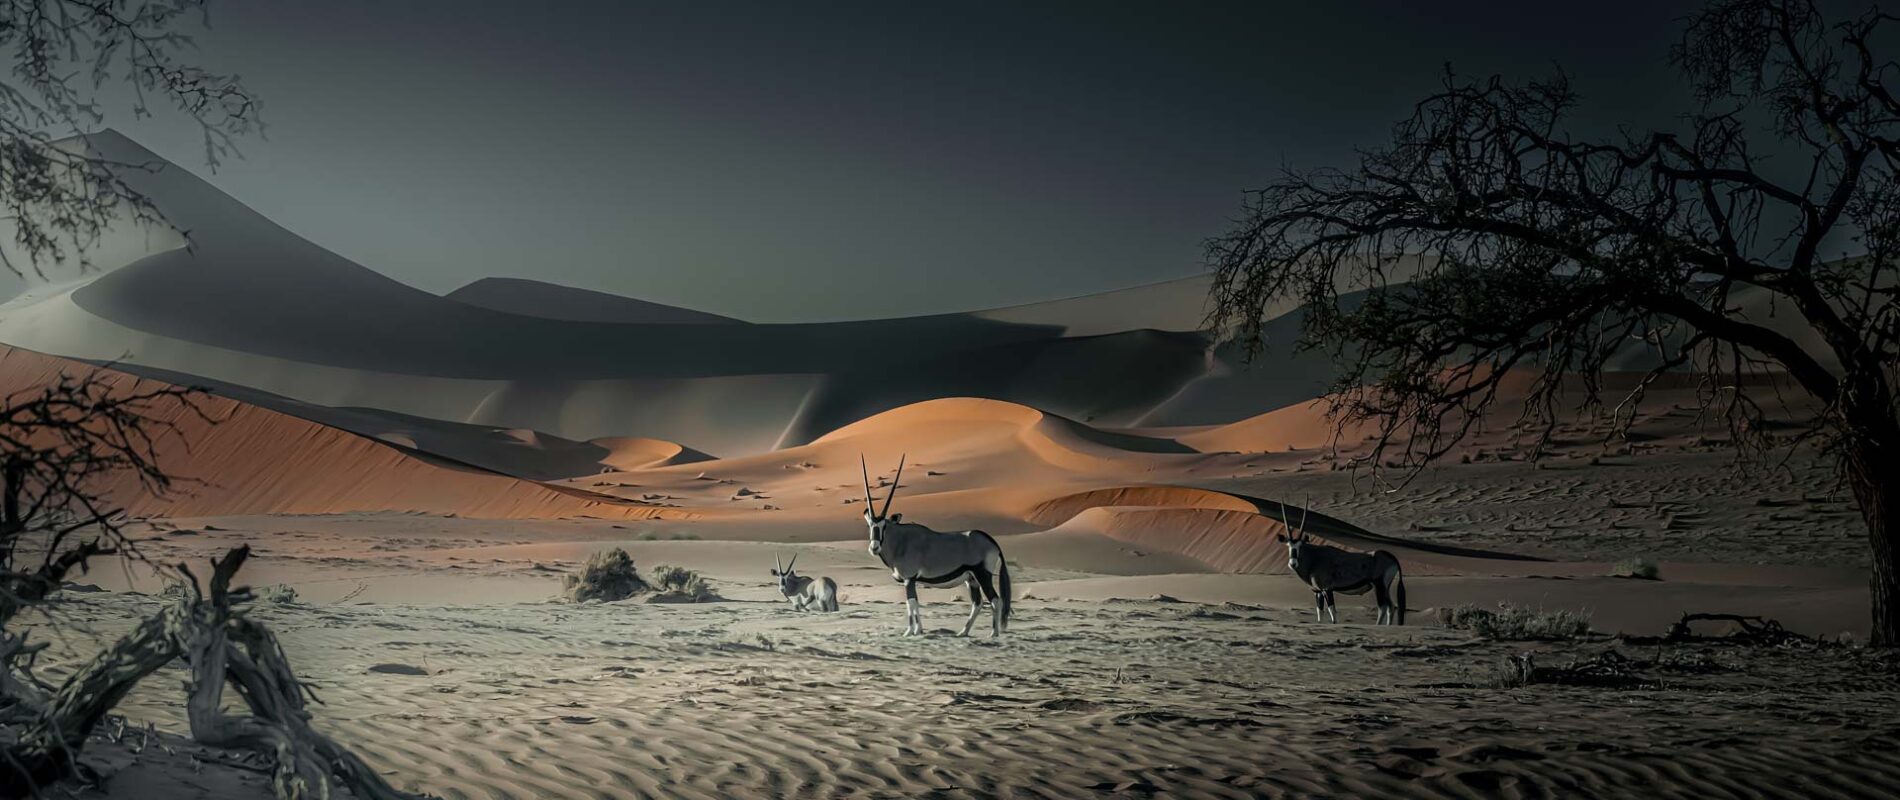 oryx in sand dunes